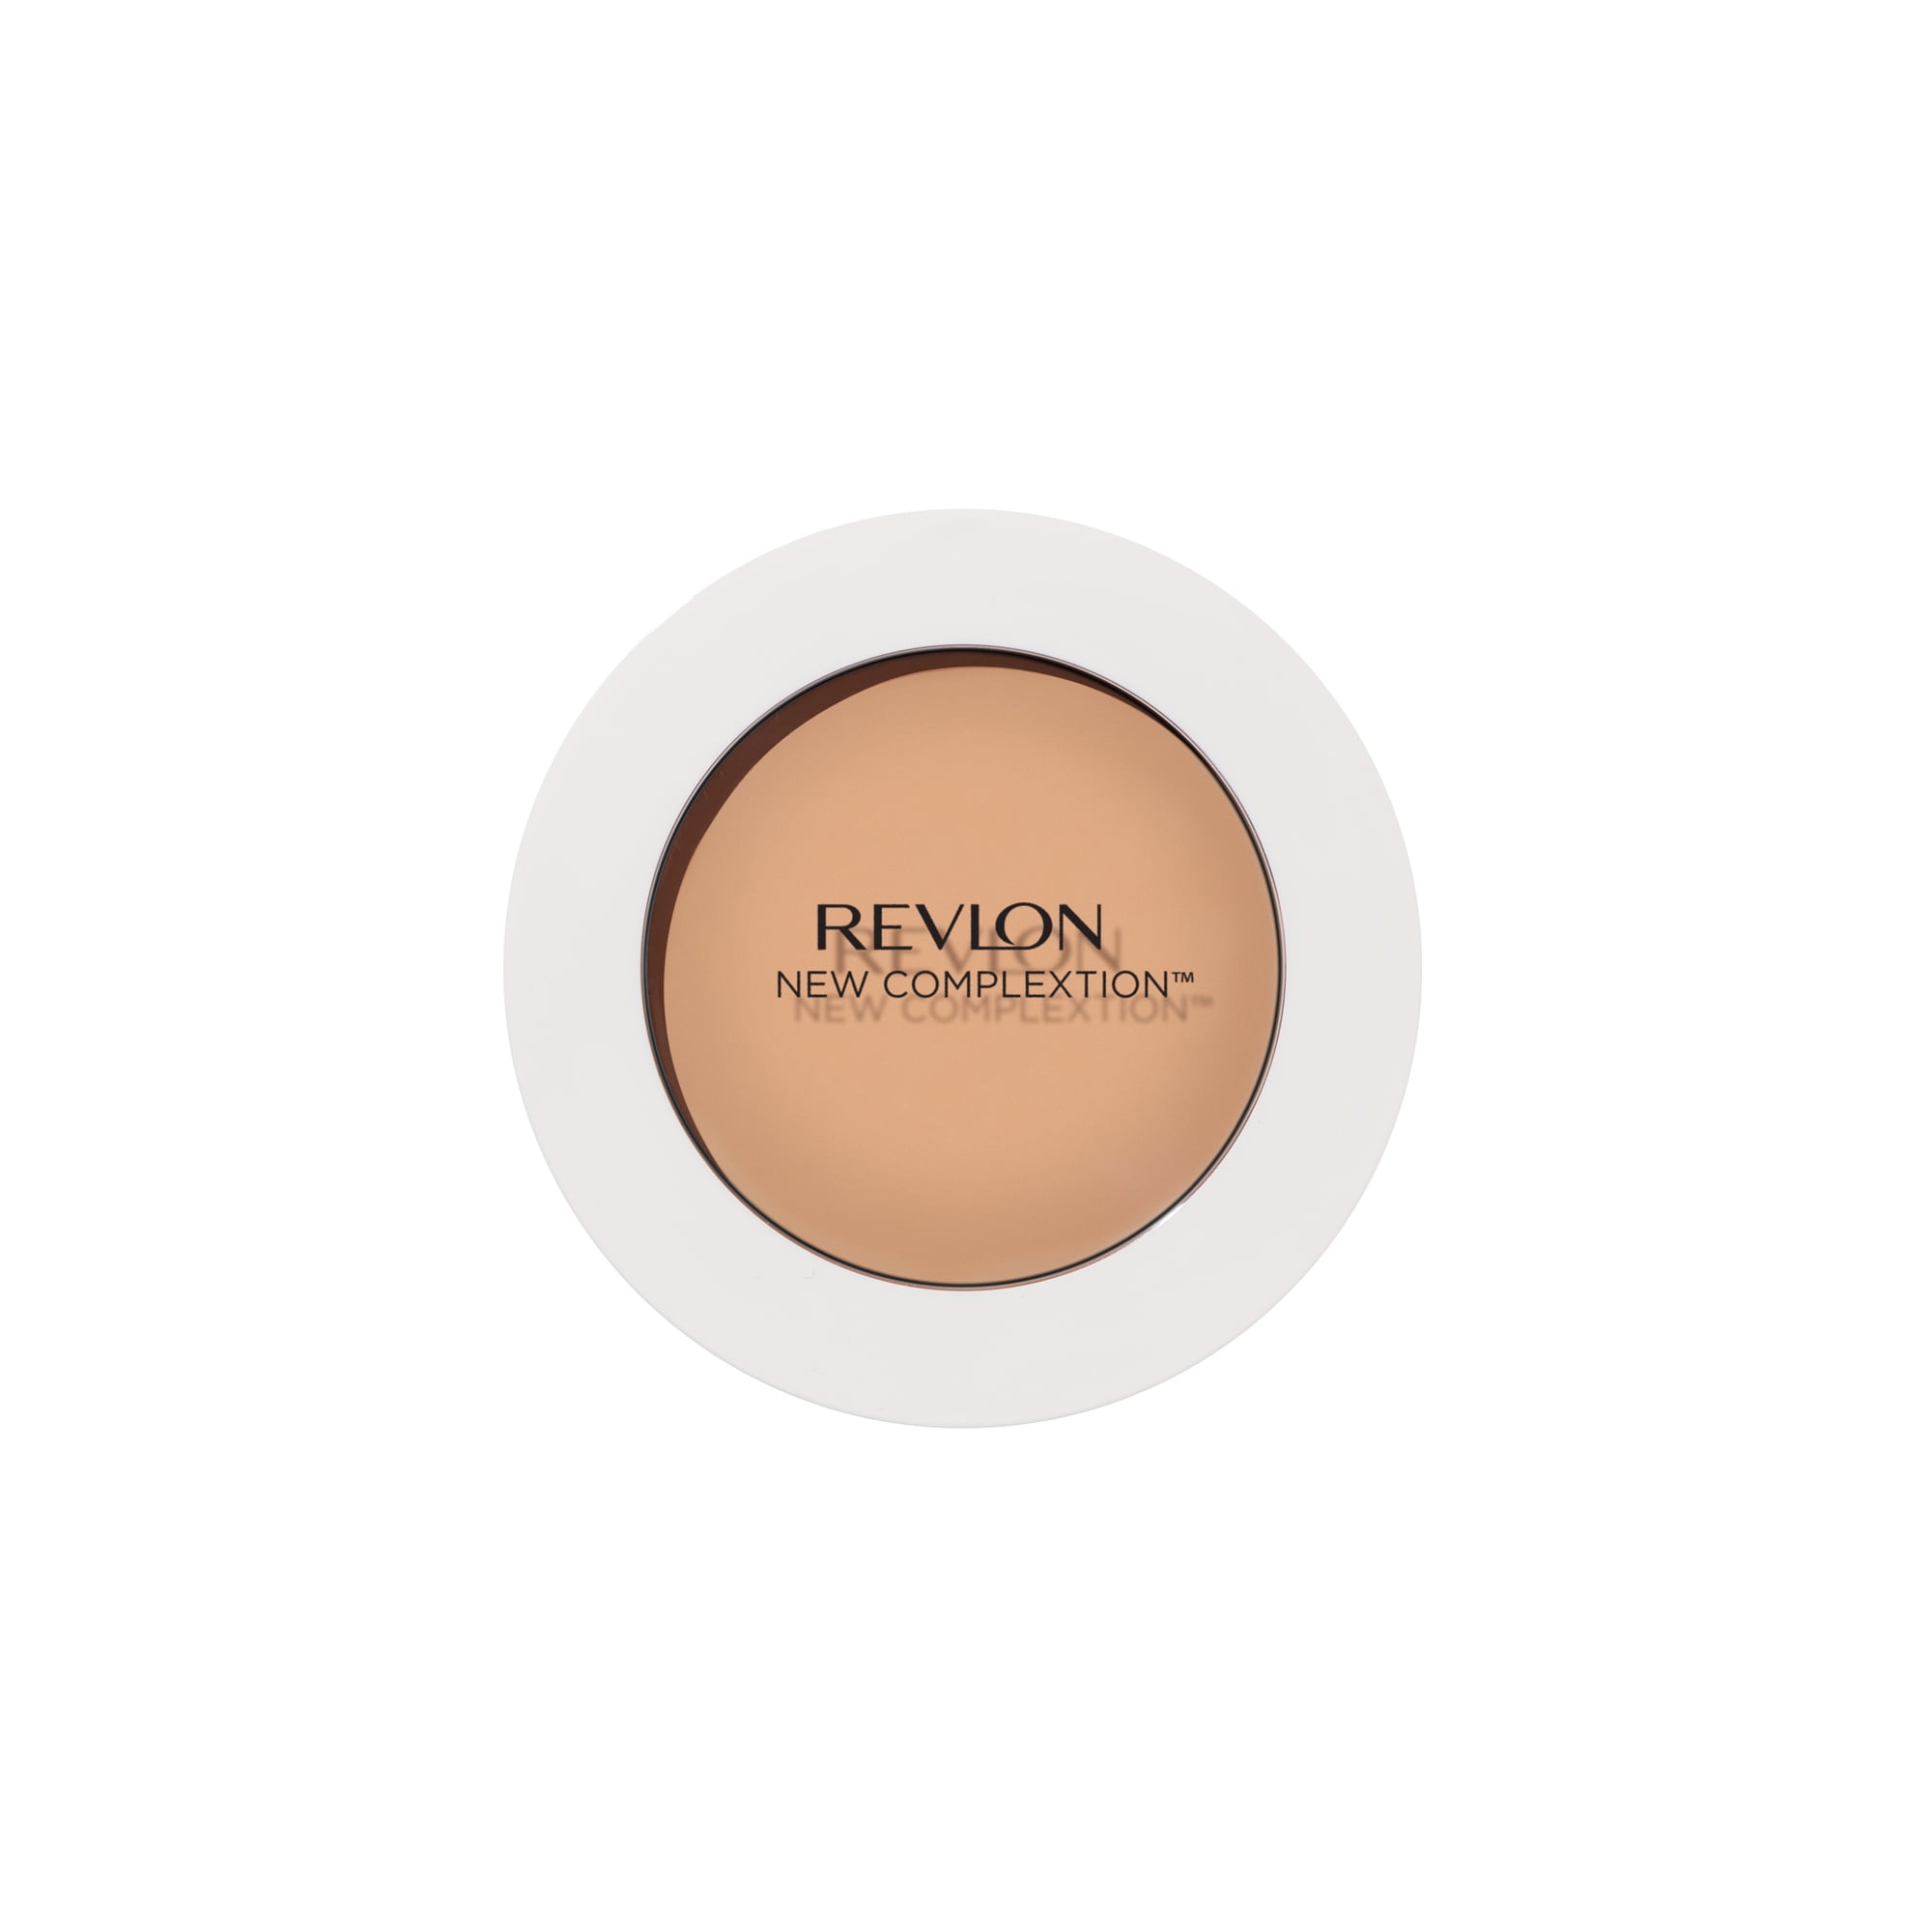 Revlon New Complexion One-Step Compact Makeup, 005 Medium Beige, 0.35 ...